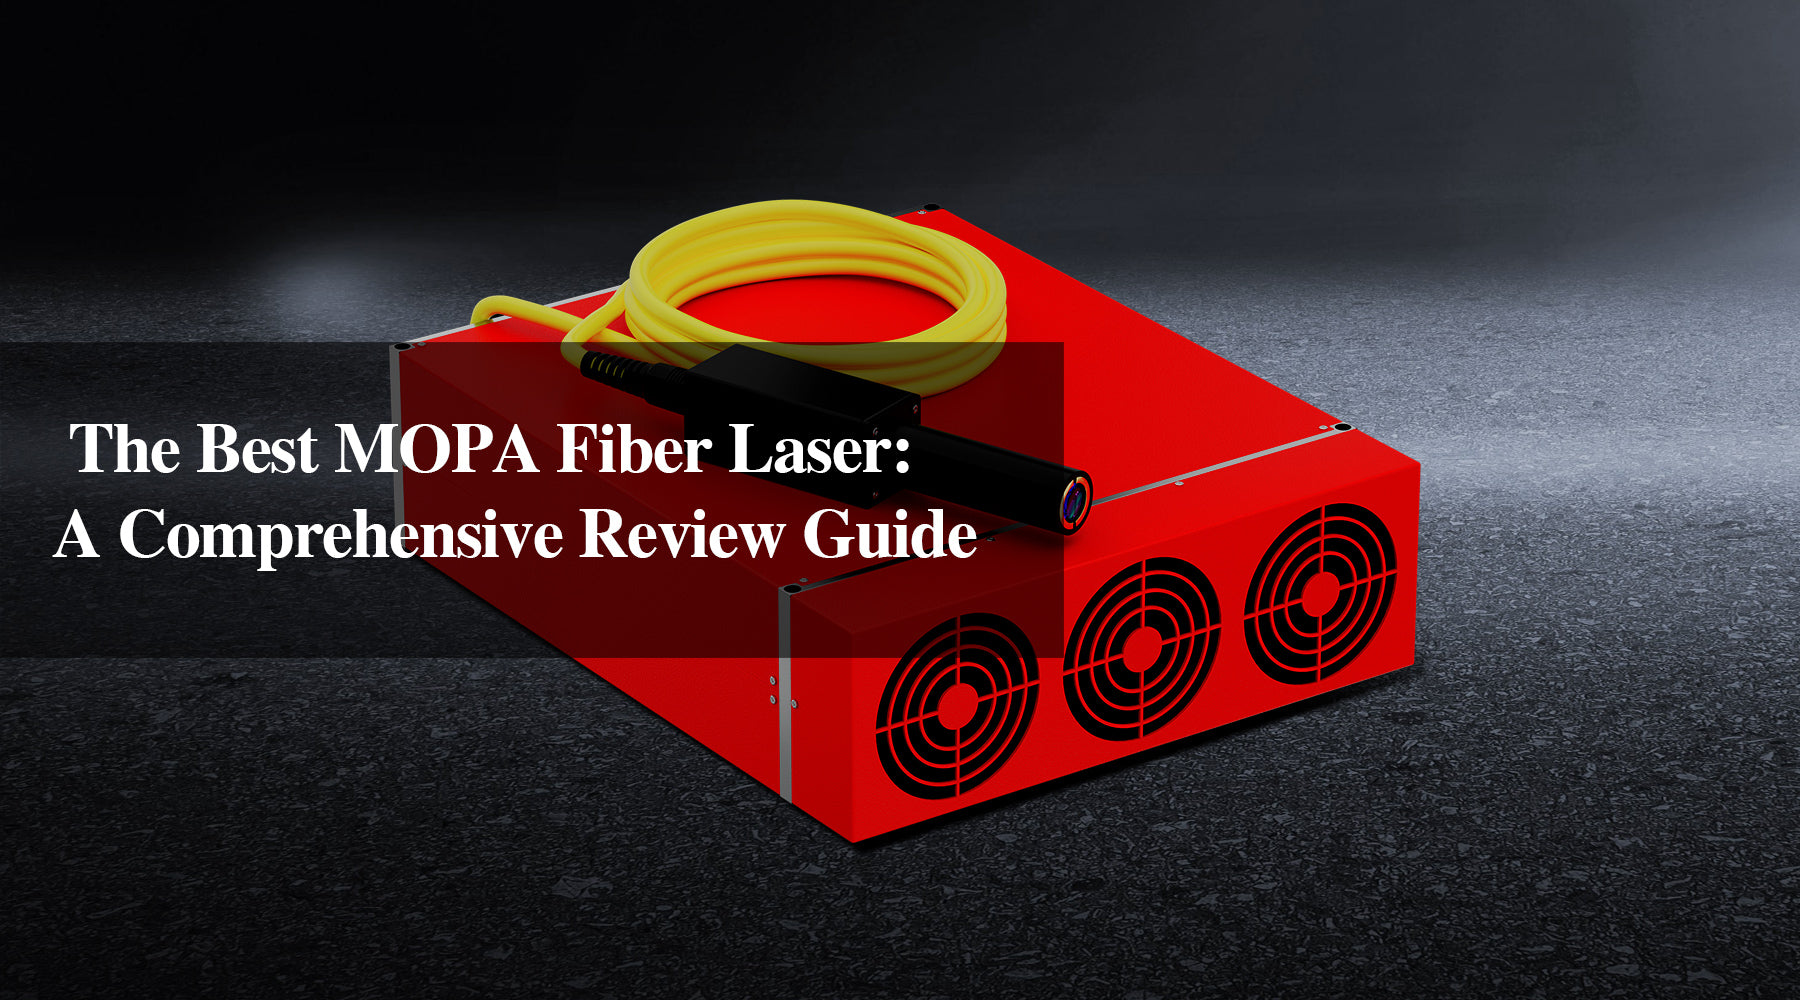 The Best MOPA Fiber Laser: A Comprehensive Review Guide